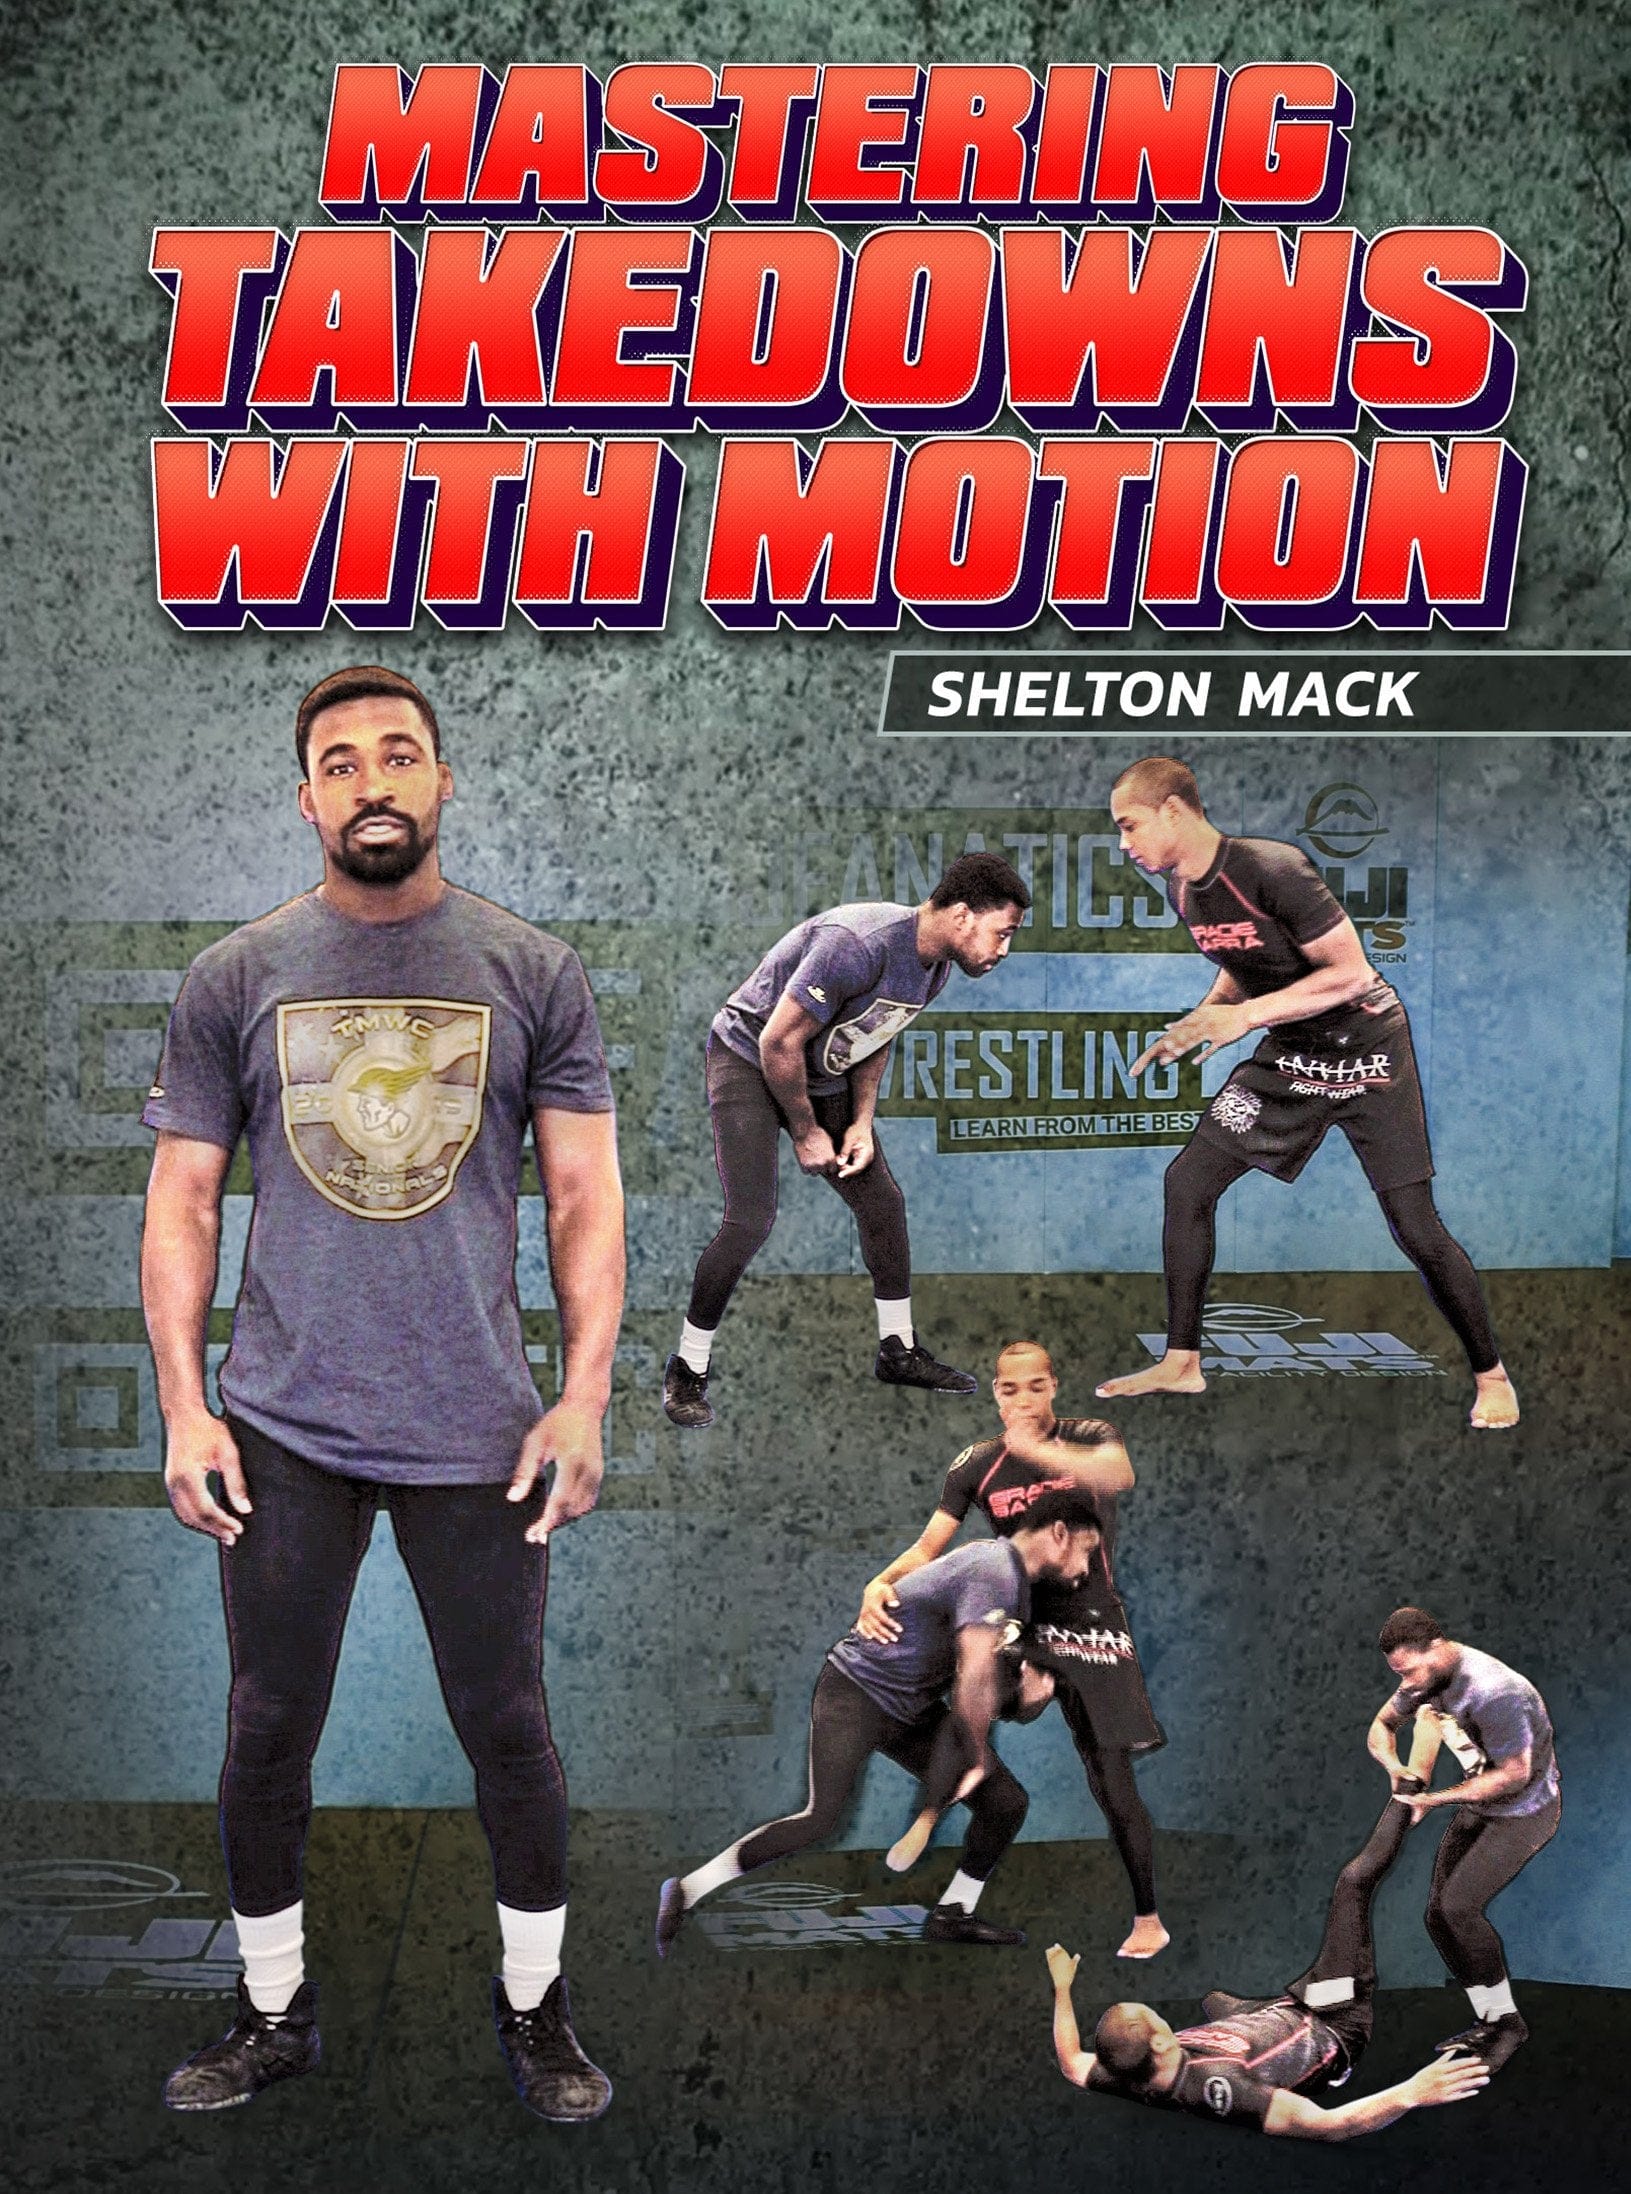 Mastering Takedowns With Motion by Shelton Mack - Fanatic Wrestling